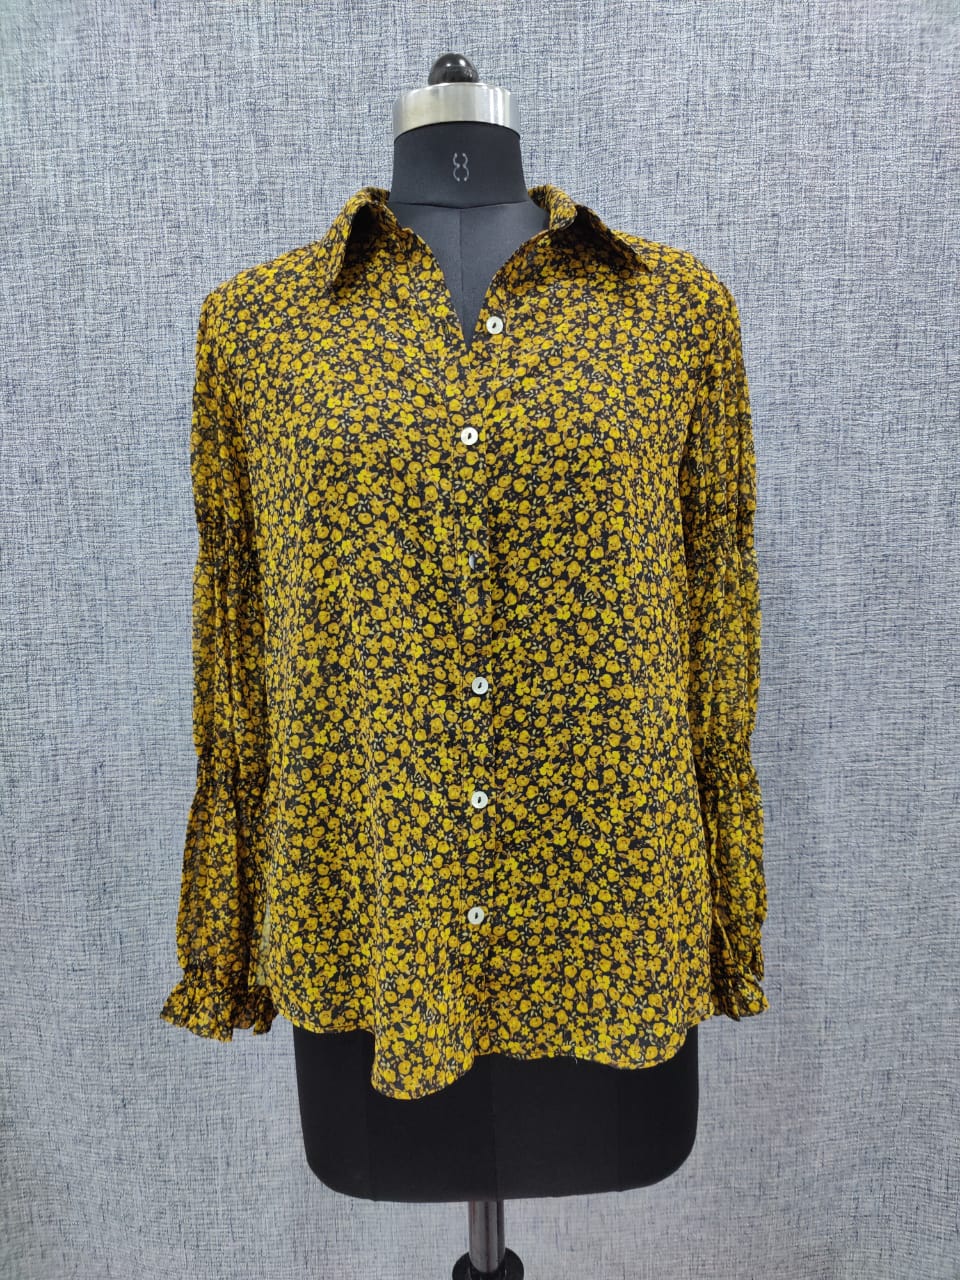 ZARA Yellow And Black Floral Print Sheer Lose Shirt | Relove